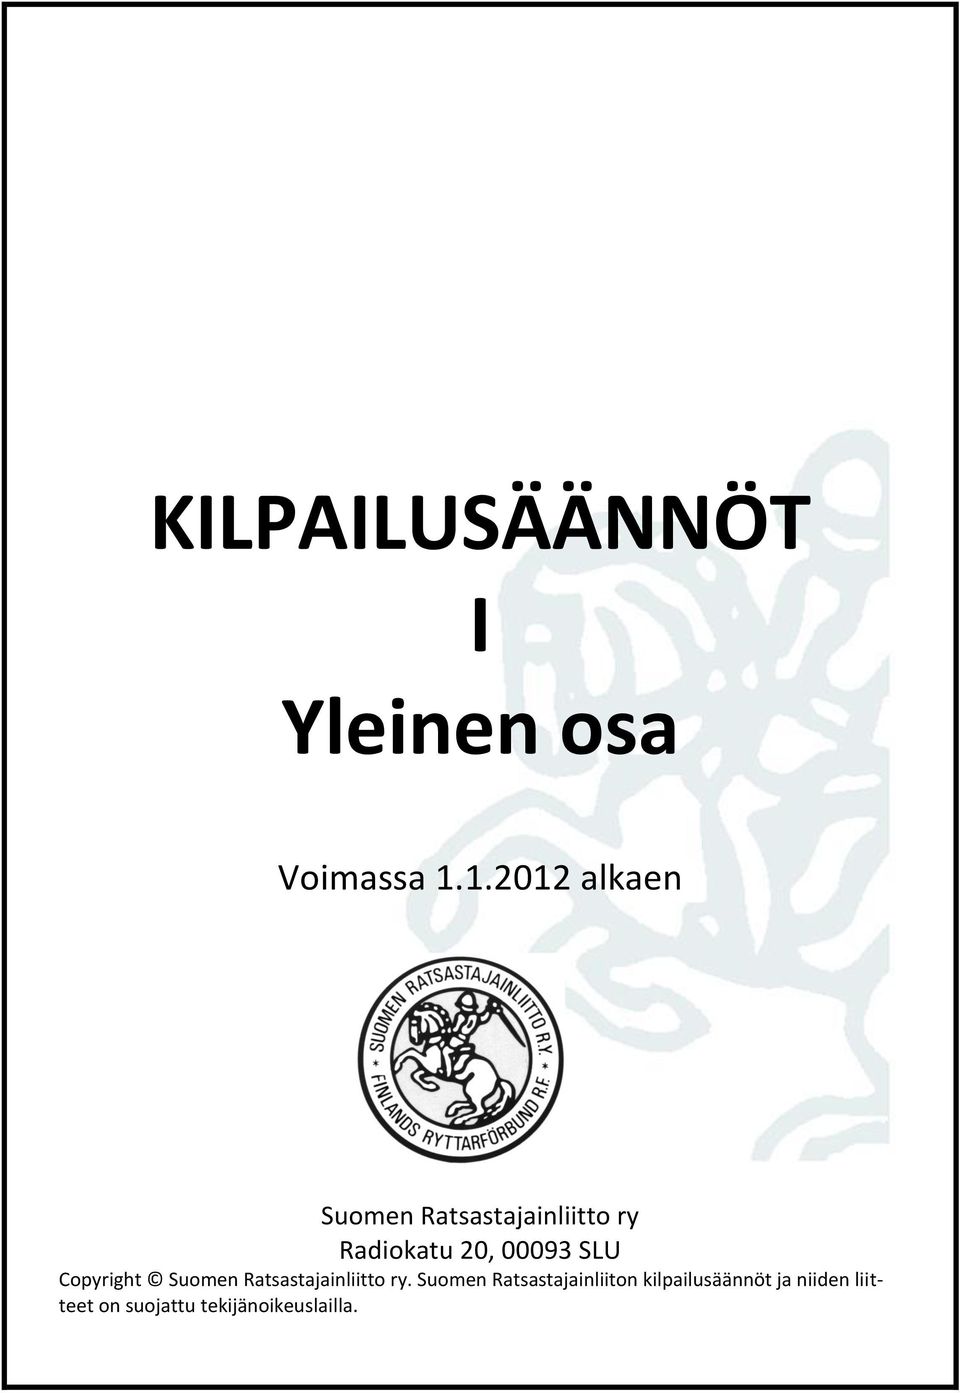 00093 SLU Copyright Suomen Ratsastajainliitto ry.